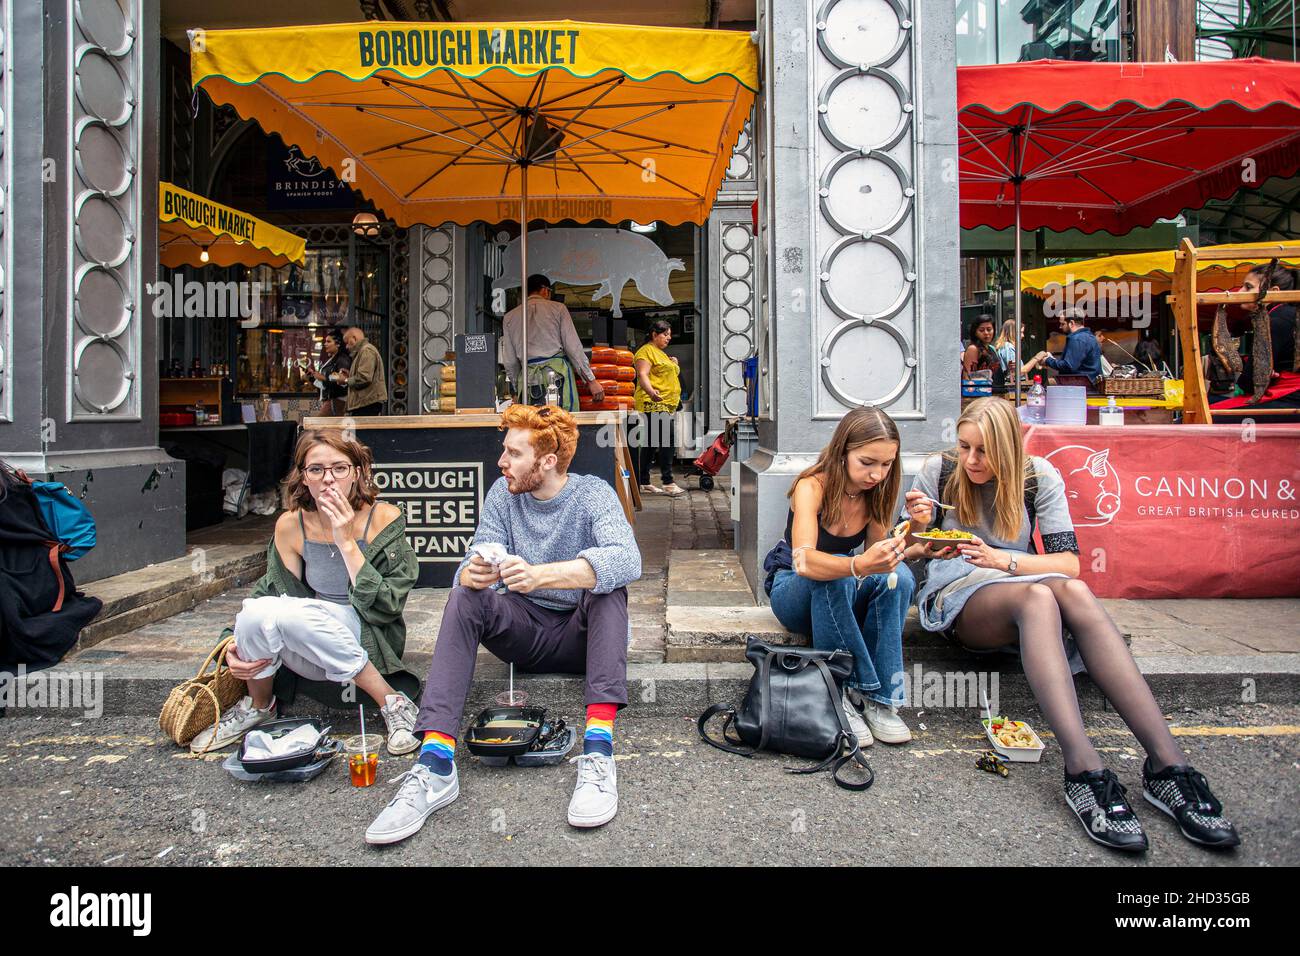 People enjoy eating street food at Borough Market in London Stock Photo